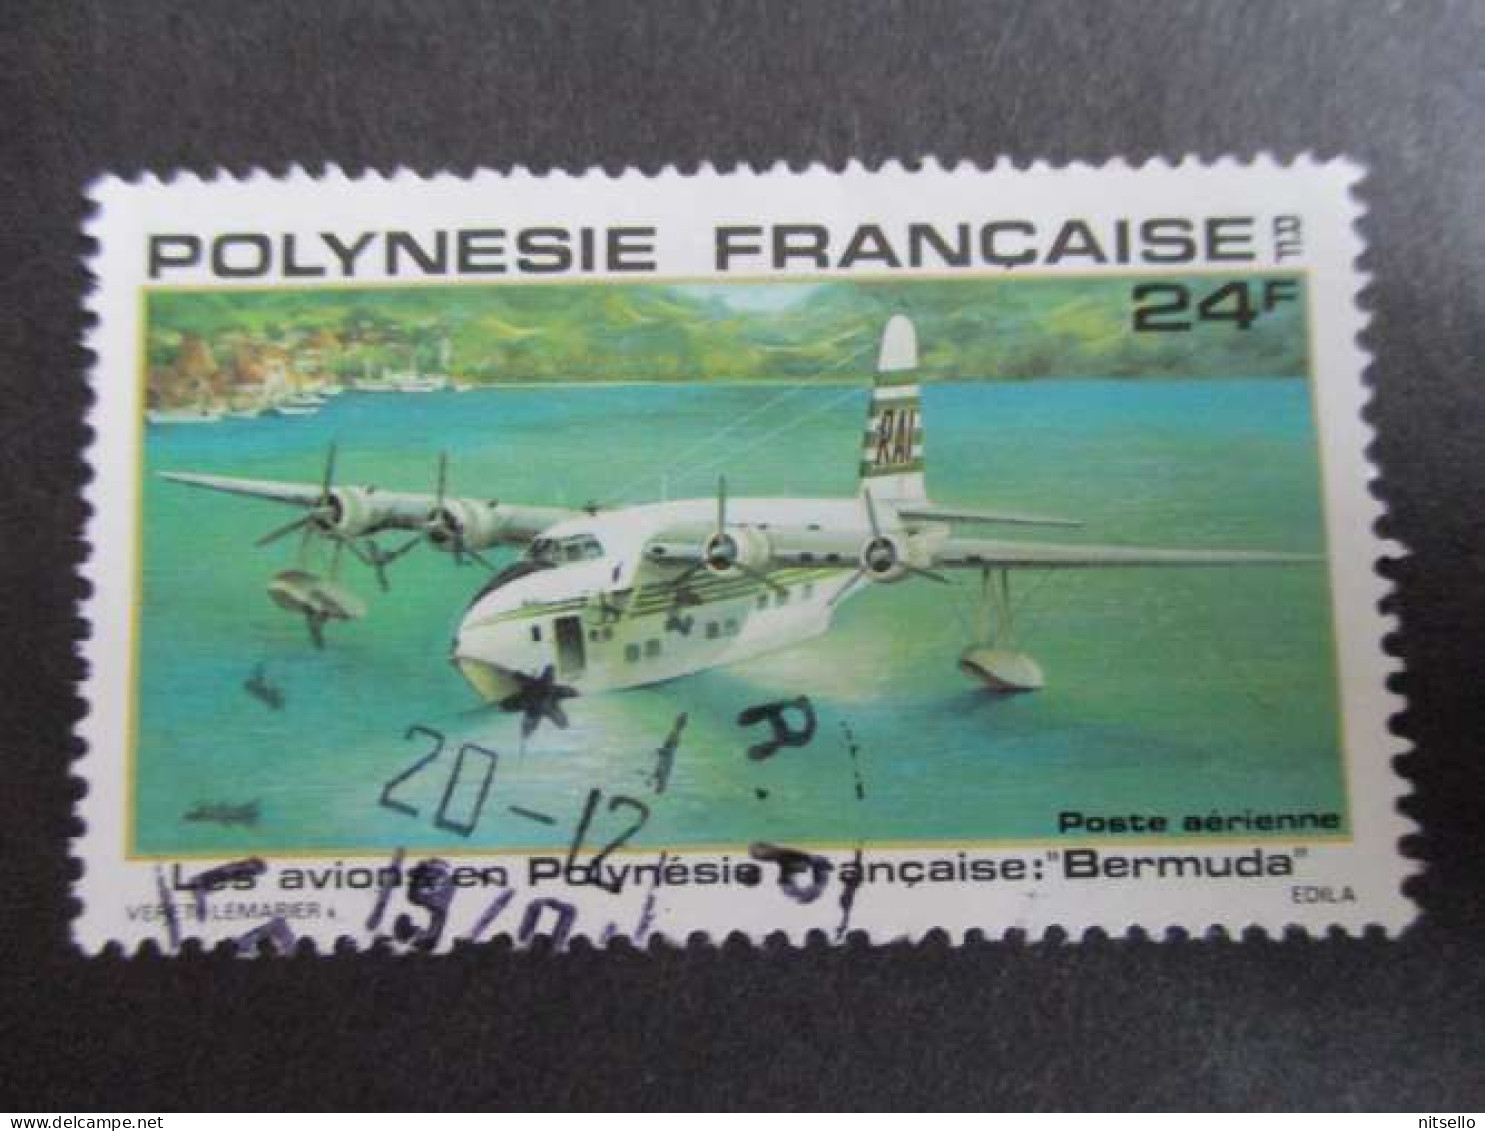 LOTE 2202A ///  (C015)  POLINESIA FRANCESA  - YVERT Nº: C AEREO 158 OBL 1980  ¡¡¡ OFERTA - LIQUIDATION - JE LIQUIDE !!! - Used Stamps